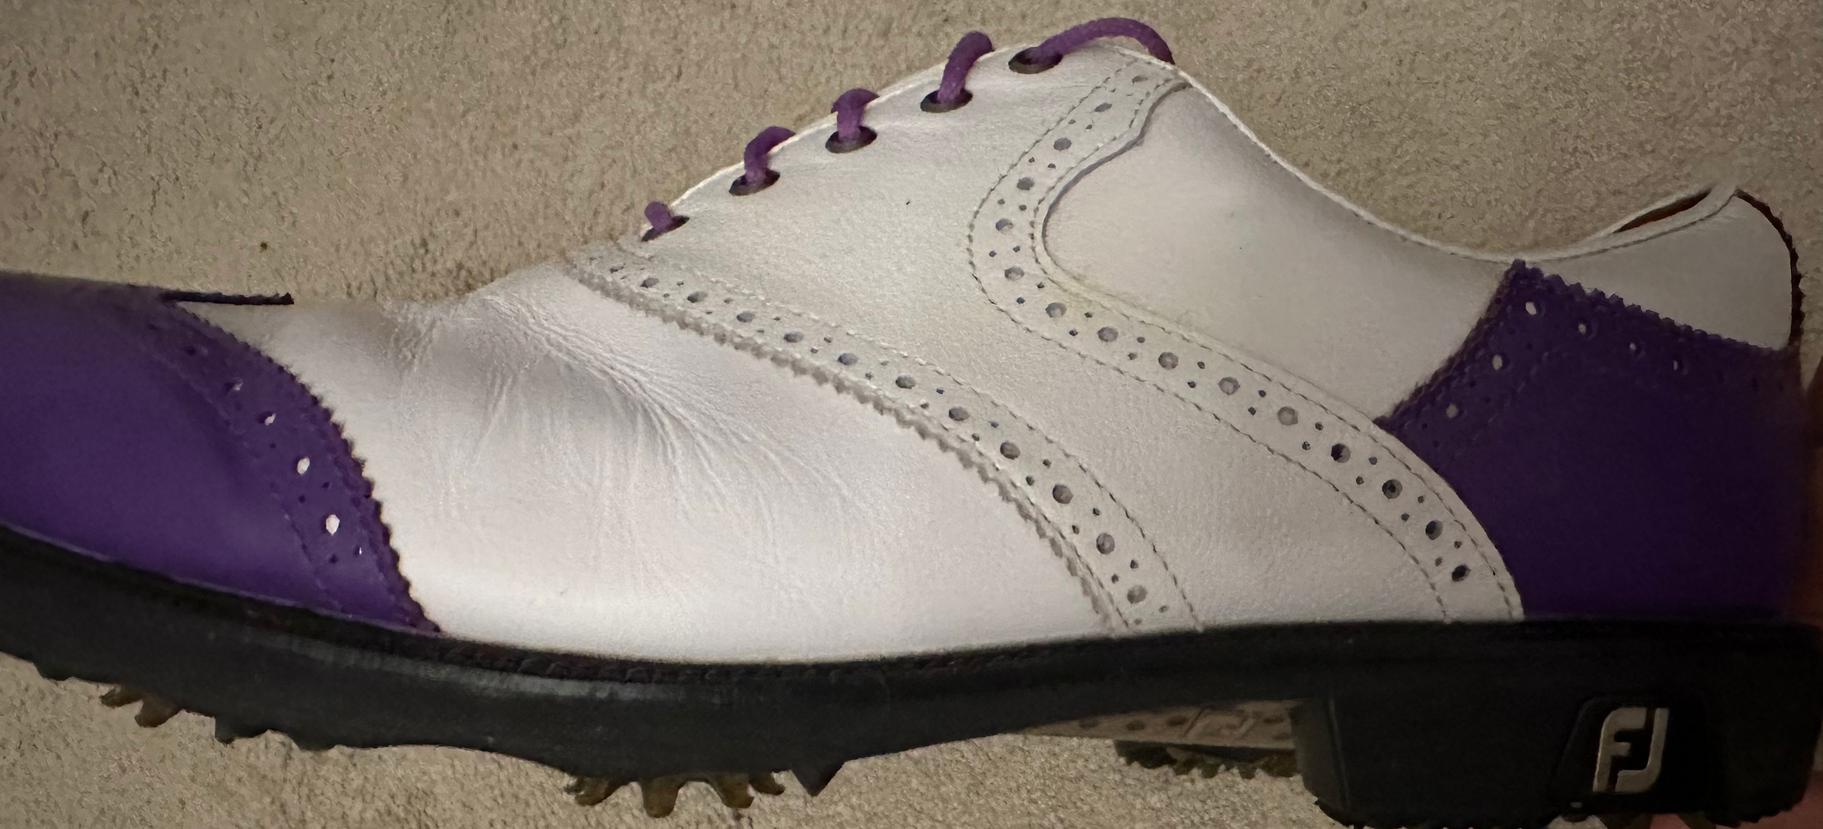 Men's Used Size 11.5 (Women's 12.5) Footjoy Golf Shoes